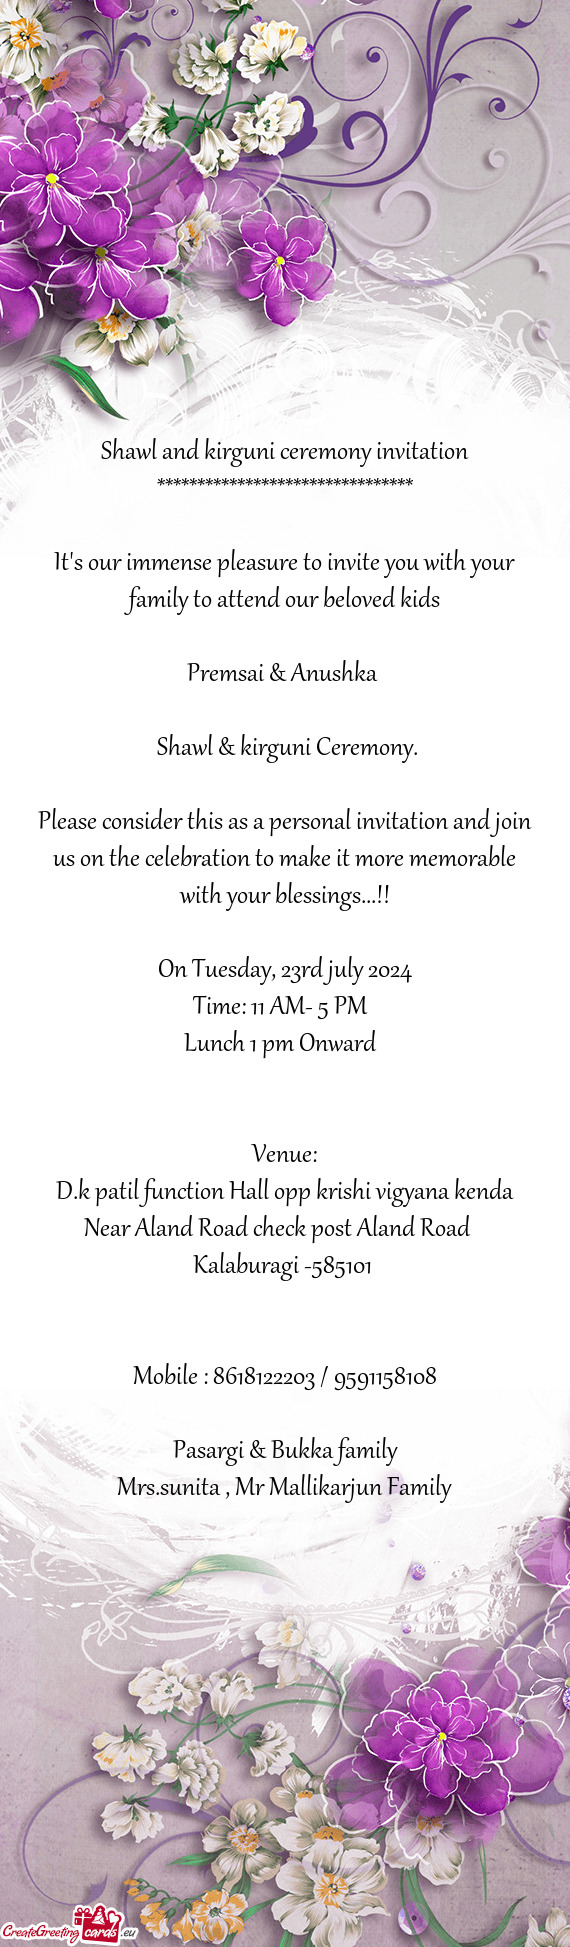 Shawl and kirguni ceremony invitation